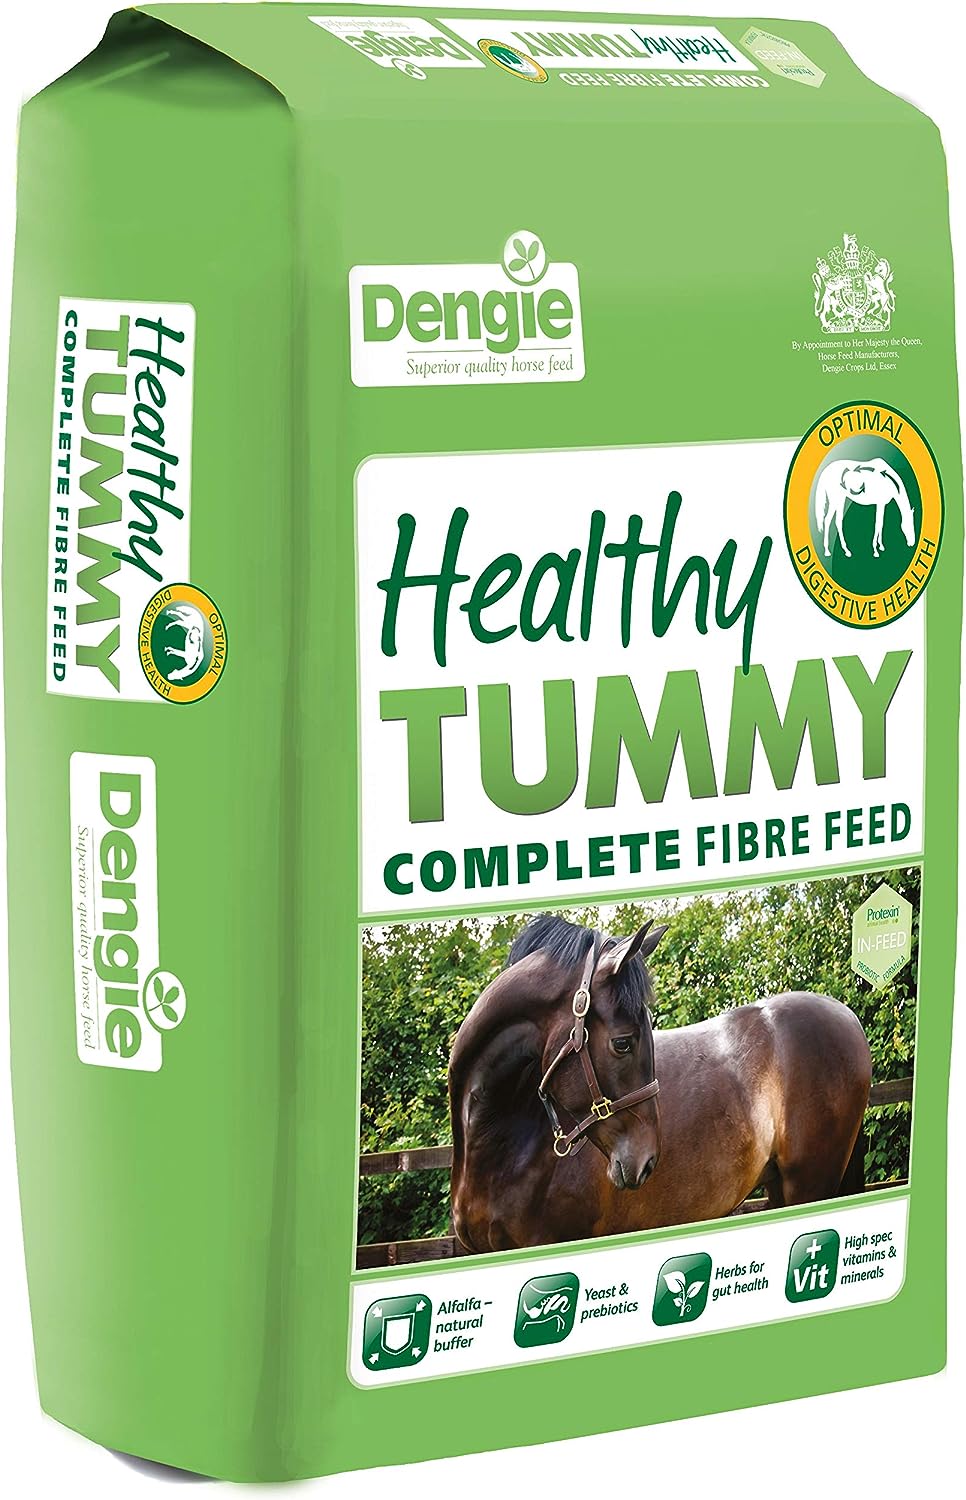 Dengie Healthy Tummy